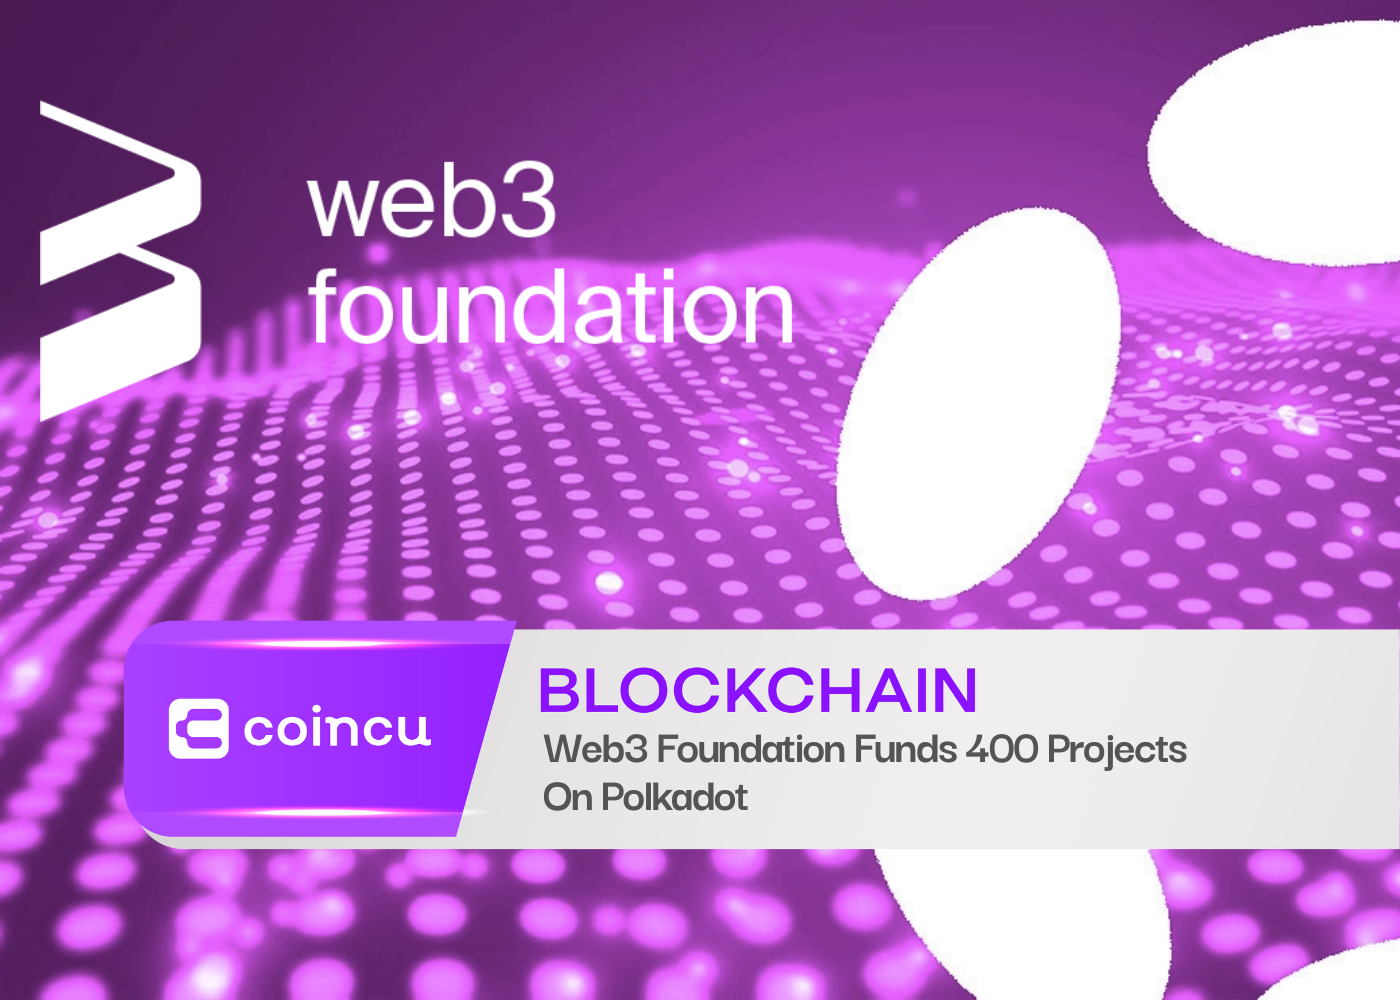 Web3 Foundation Funds 400 Projects On Polkadot